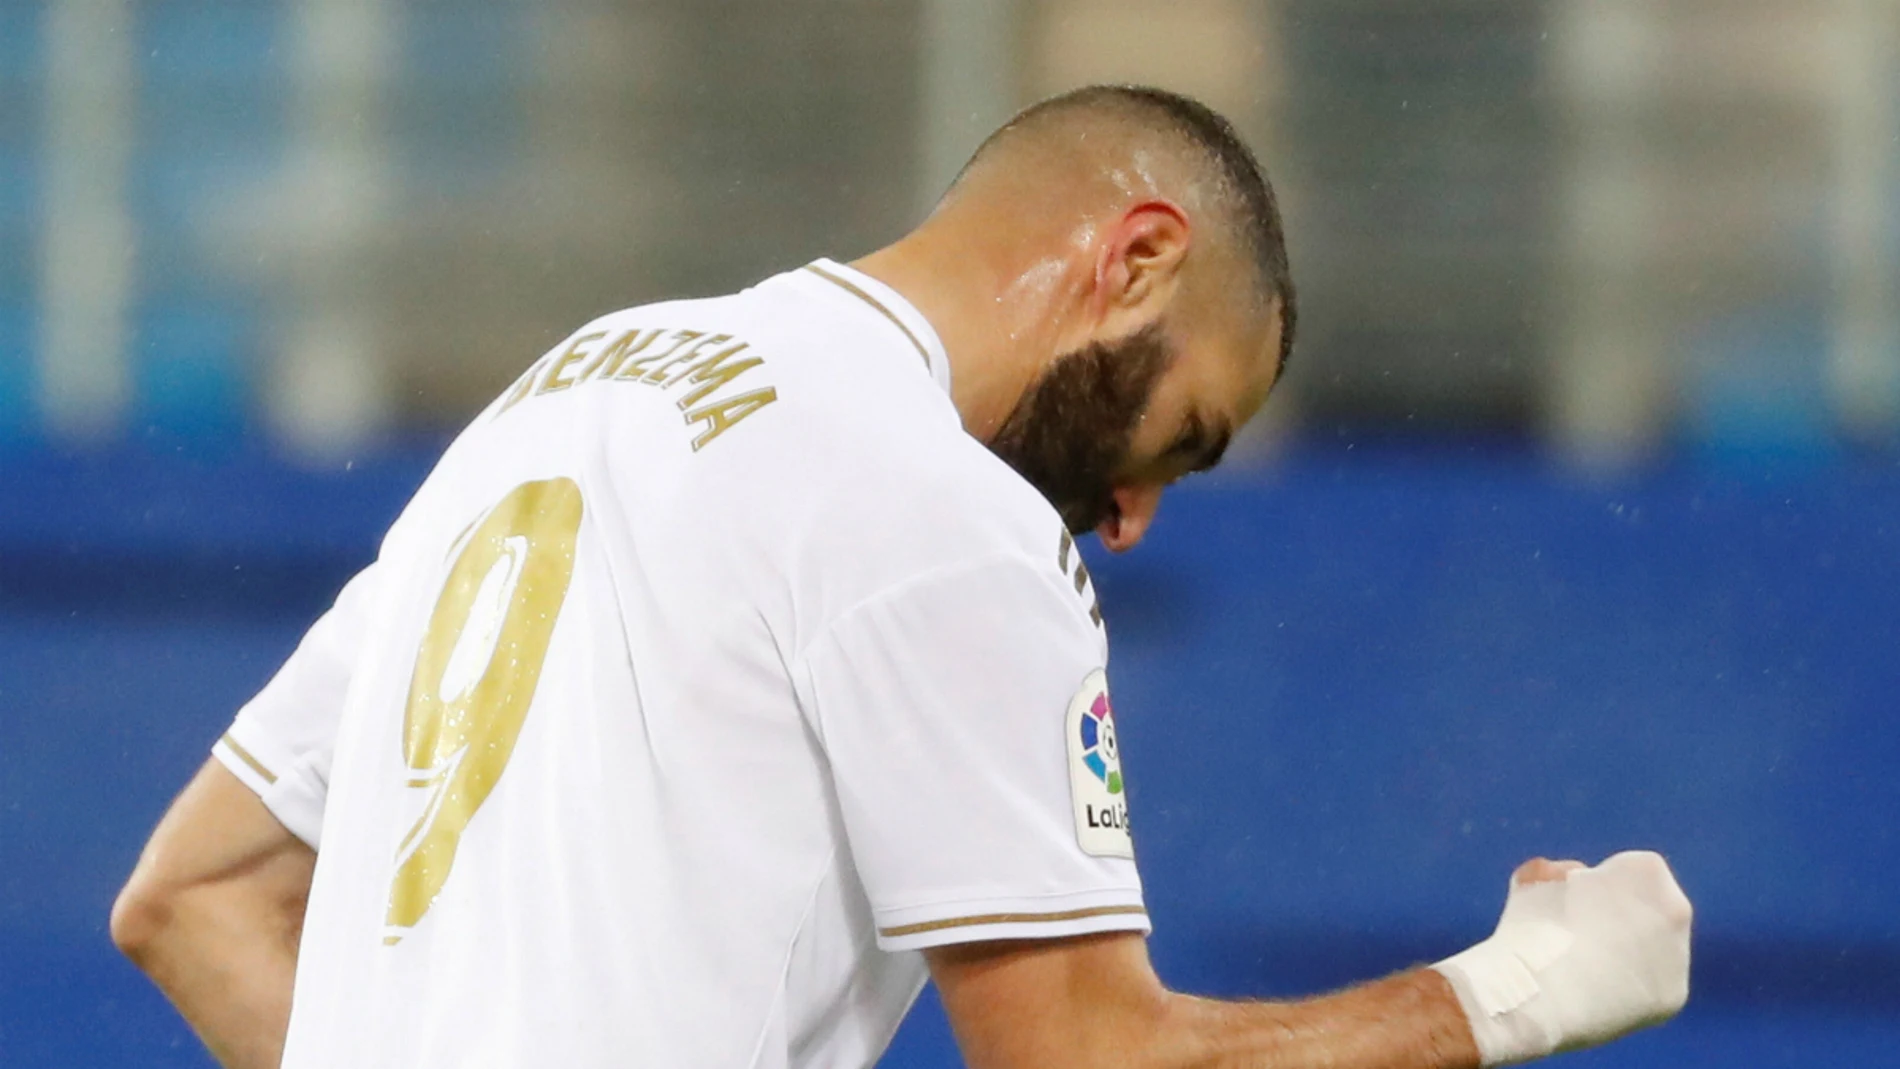 Karim Benzema celebra un gol